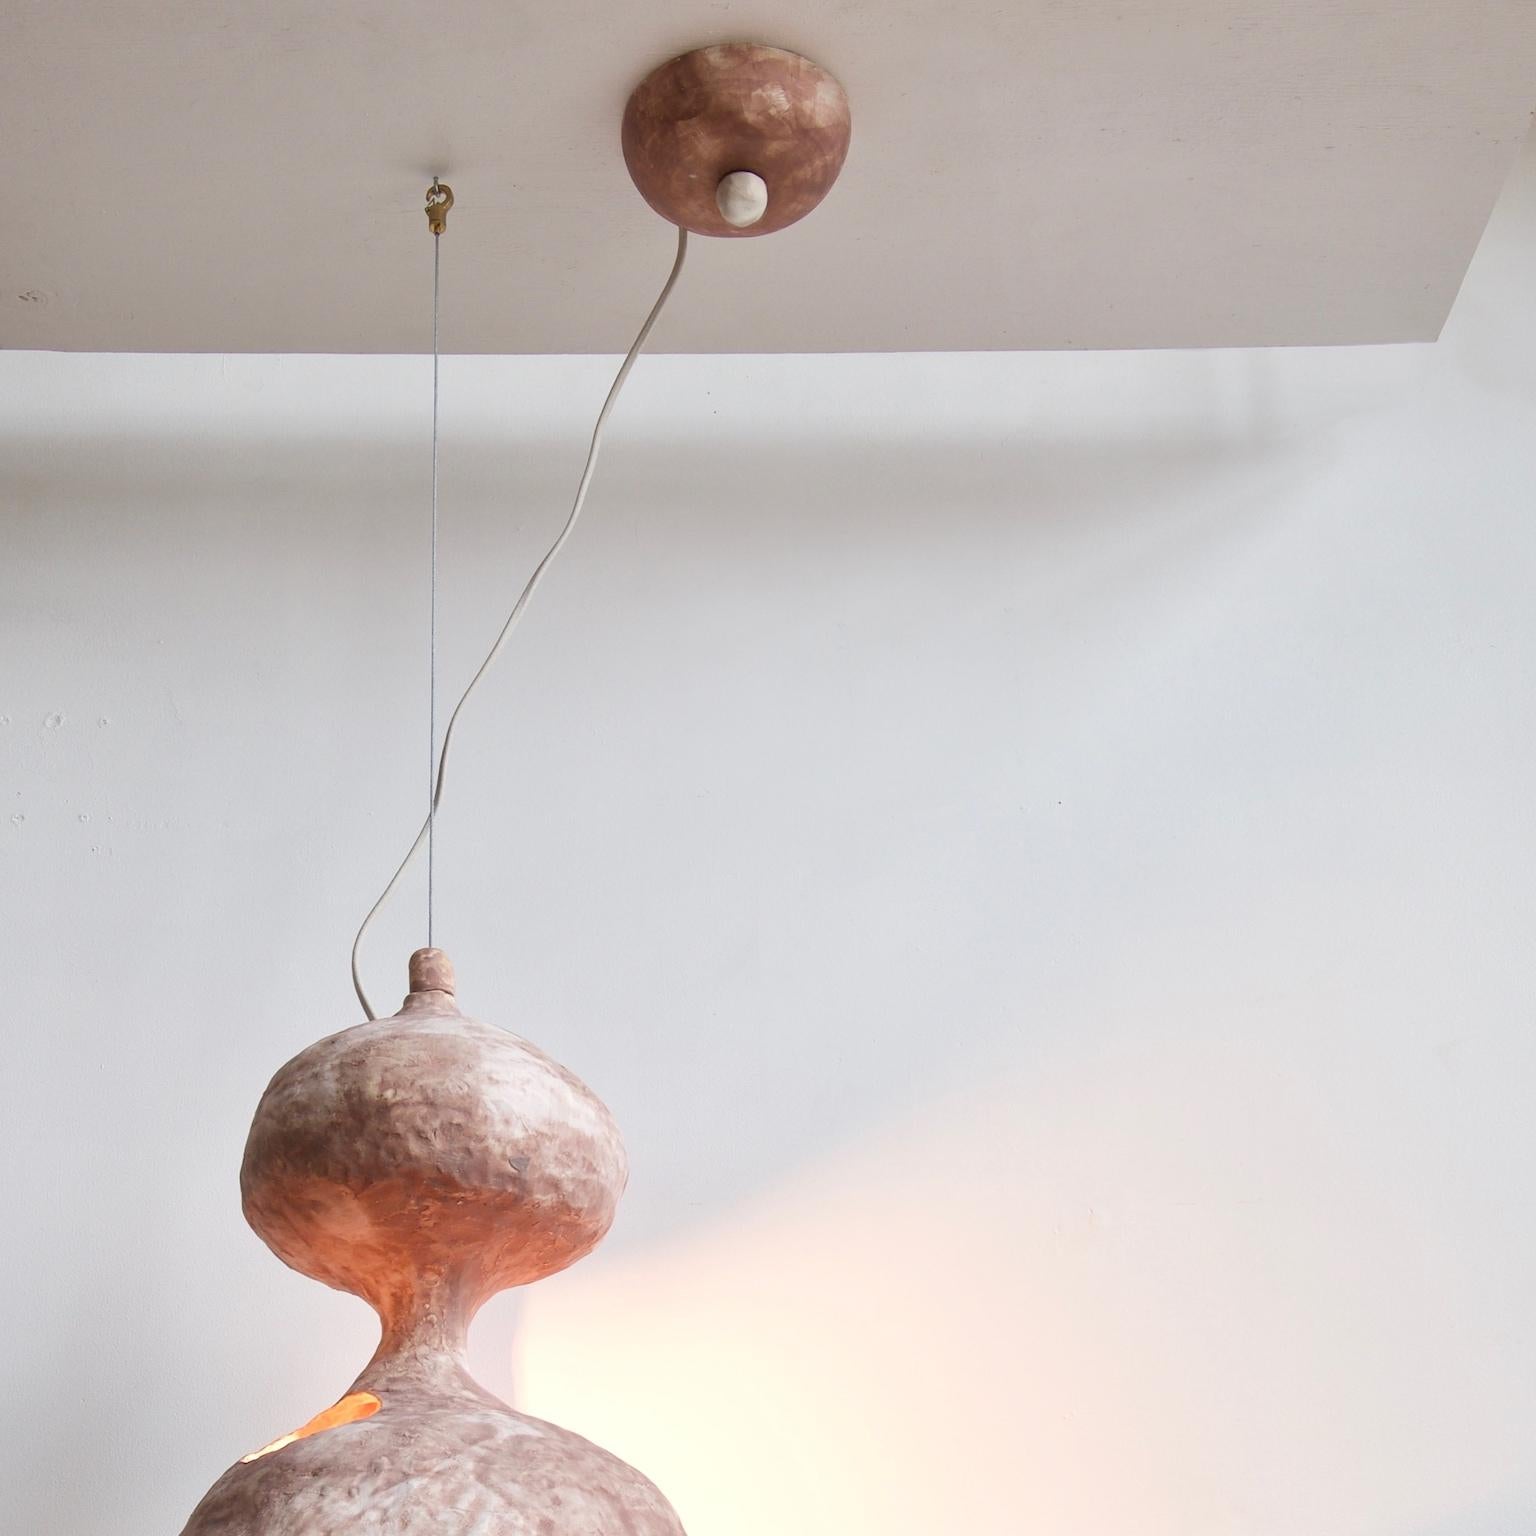 Fired Sculptural Hand-Built Ceramic Pendant Lamp in Matte Earth-Tone by Yuko Nishikawa